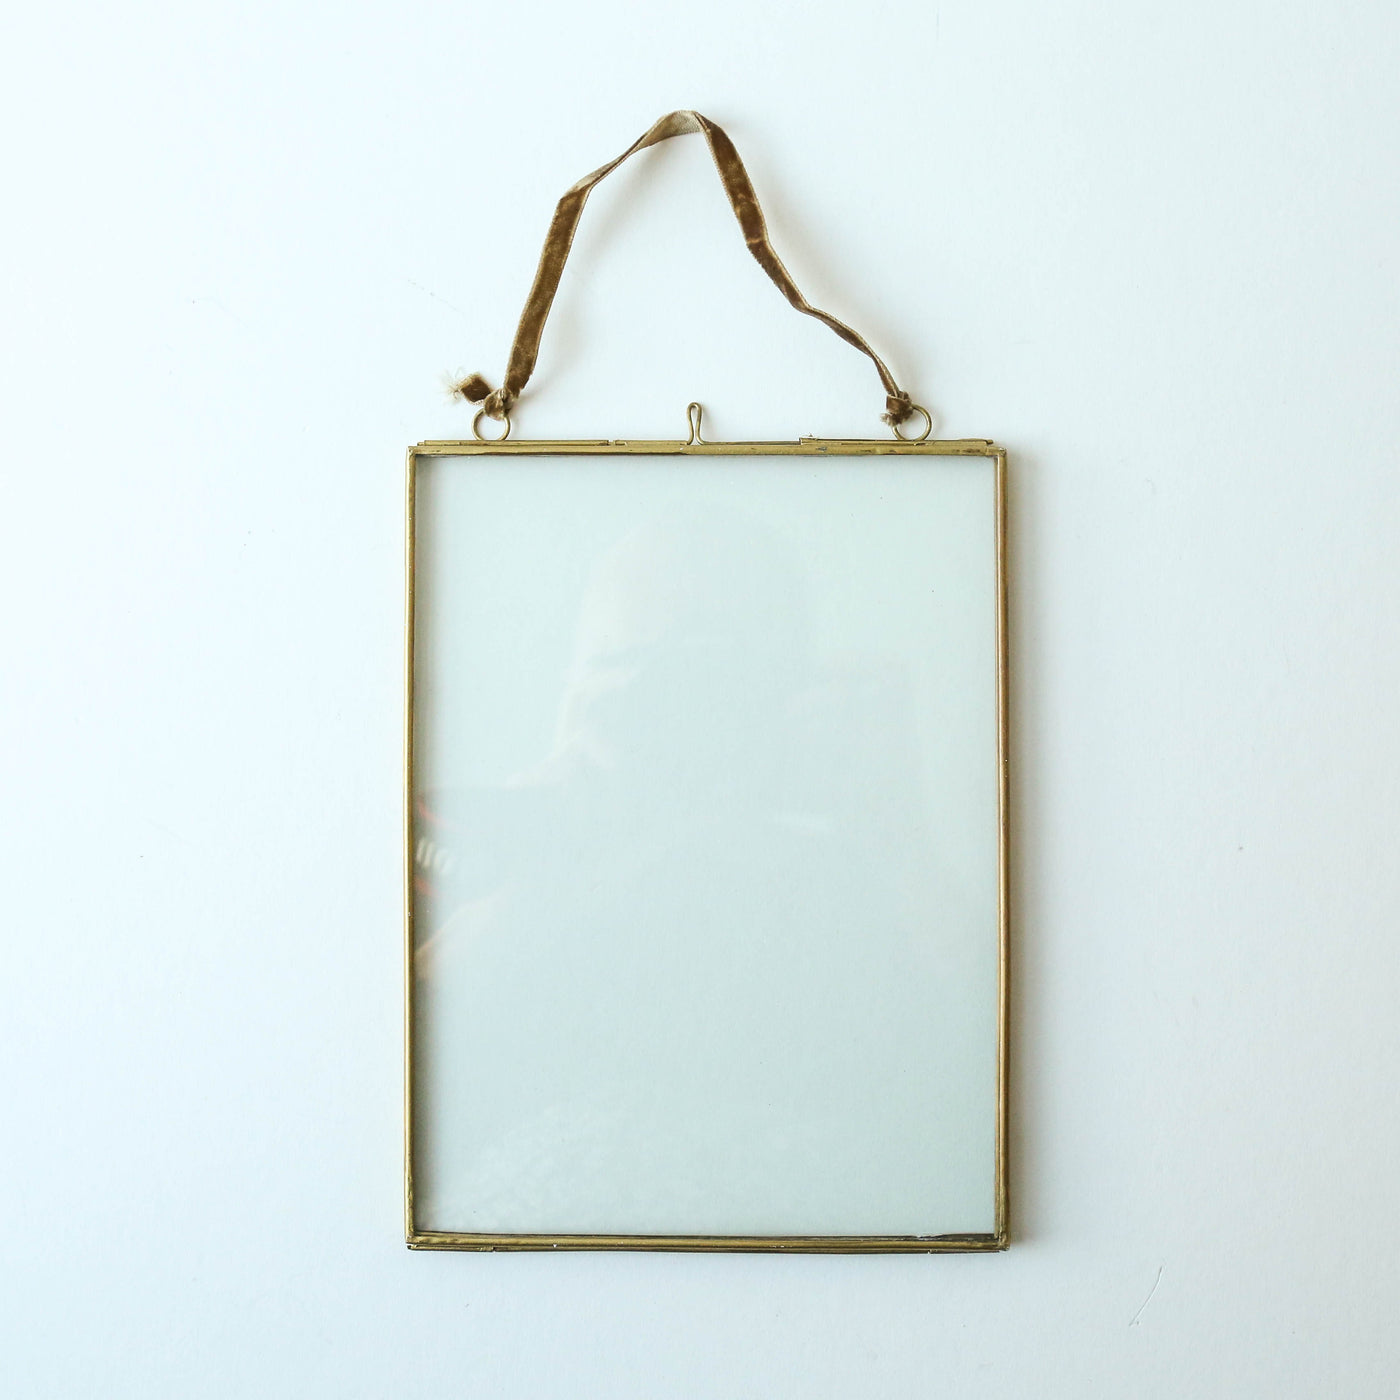 Hanging Brass Frame - Portrait 20 x 15cm